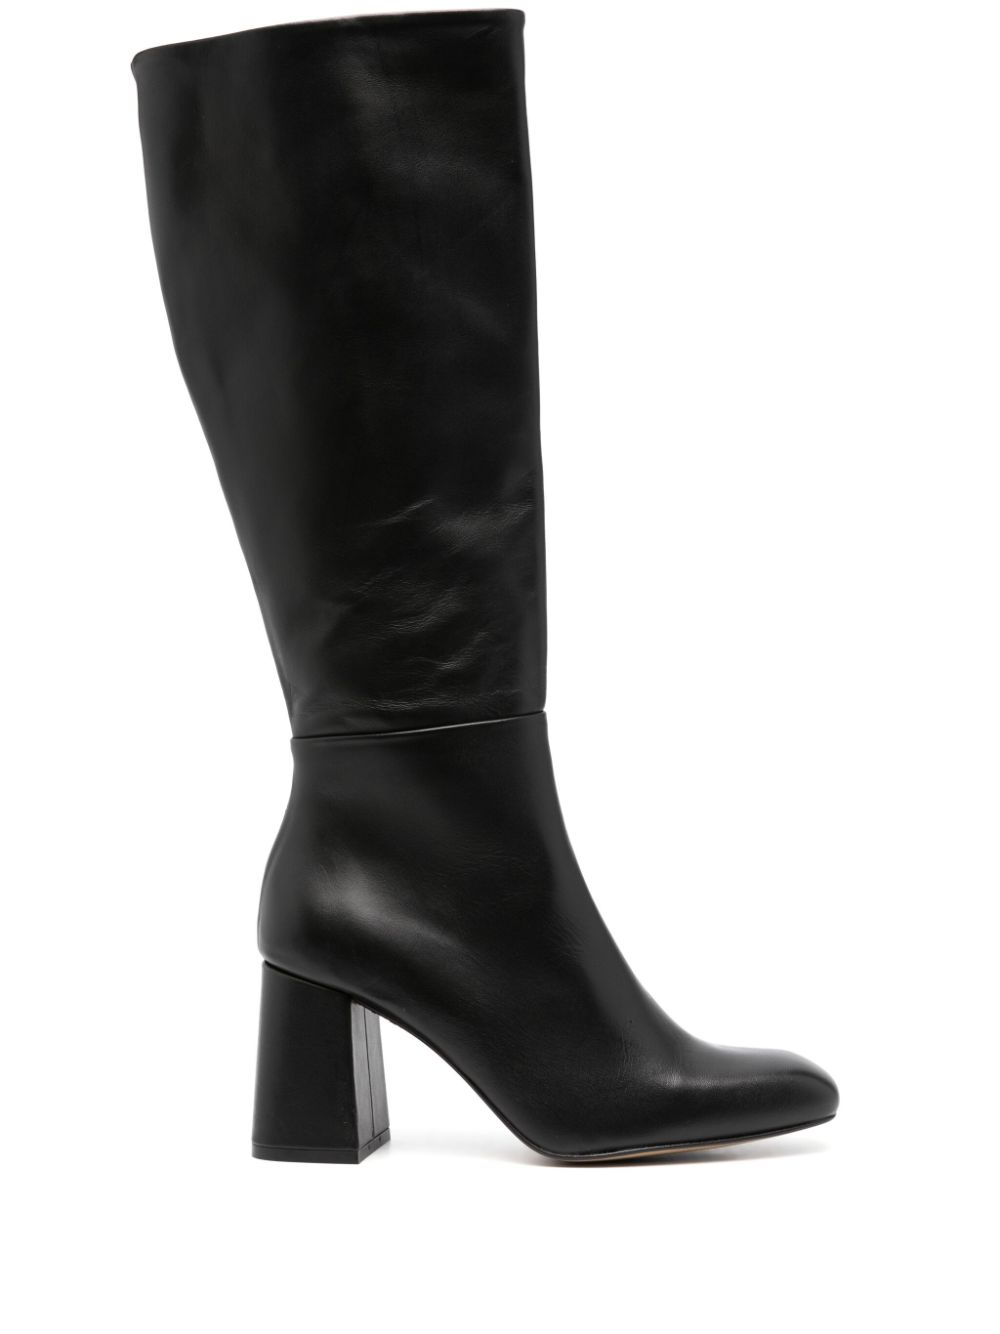 Souliers Martinez Anabel 85mm leather knee boots - Black von Souliers Martinez